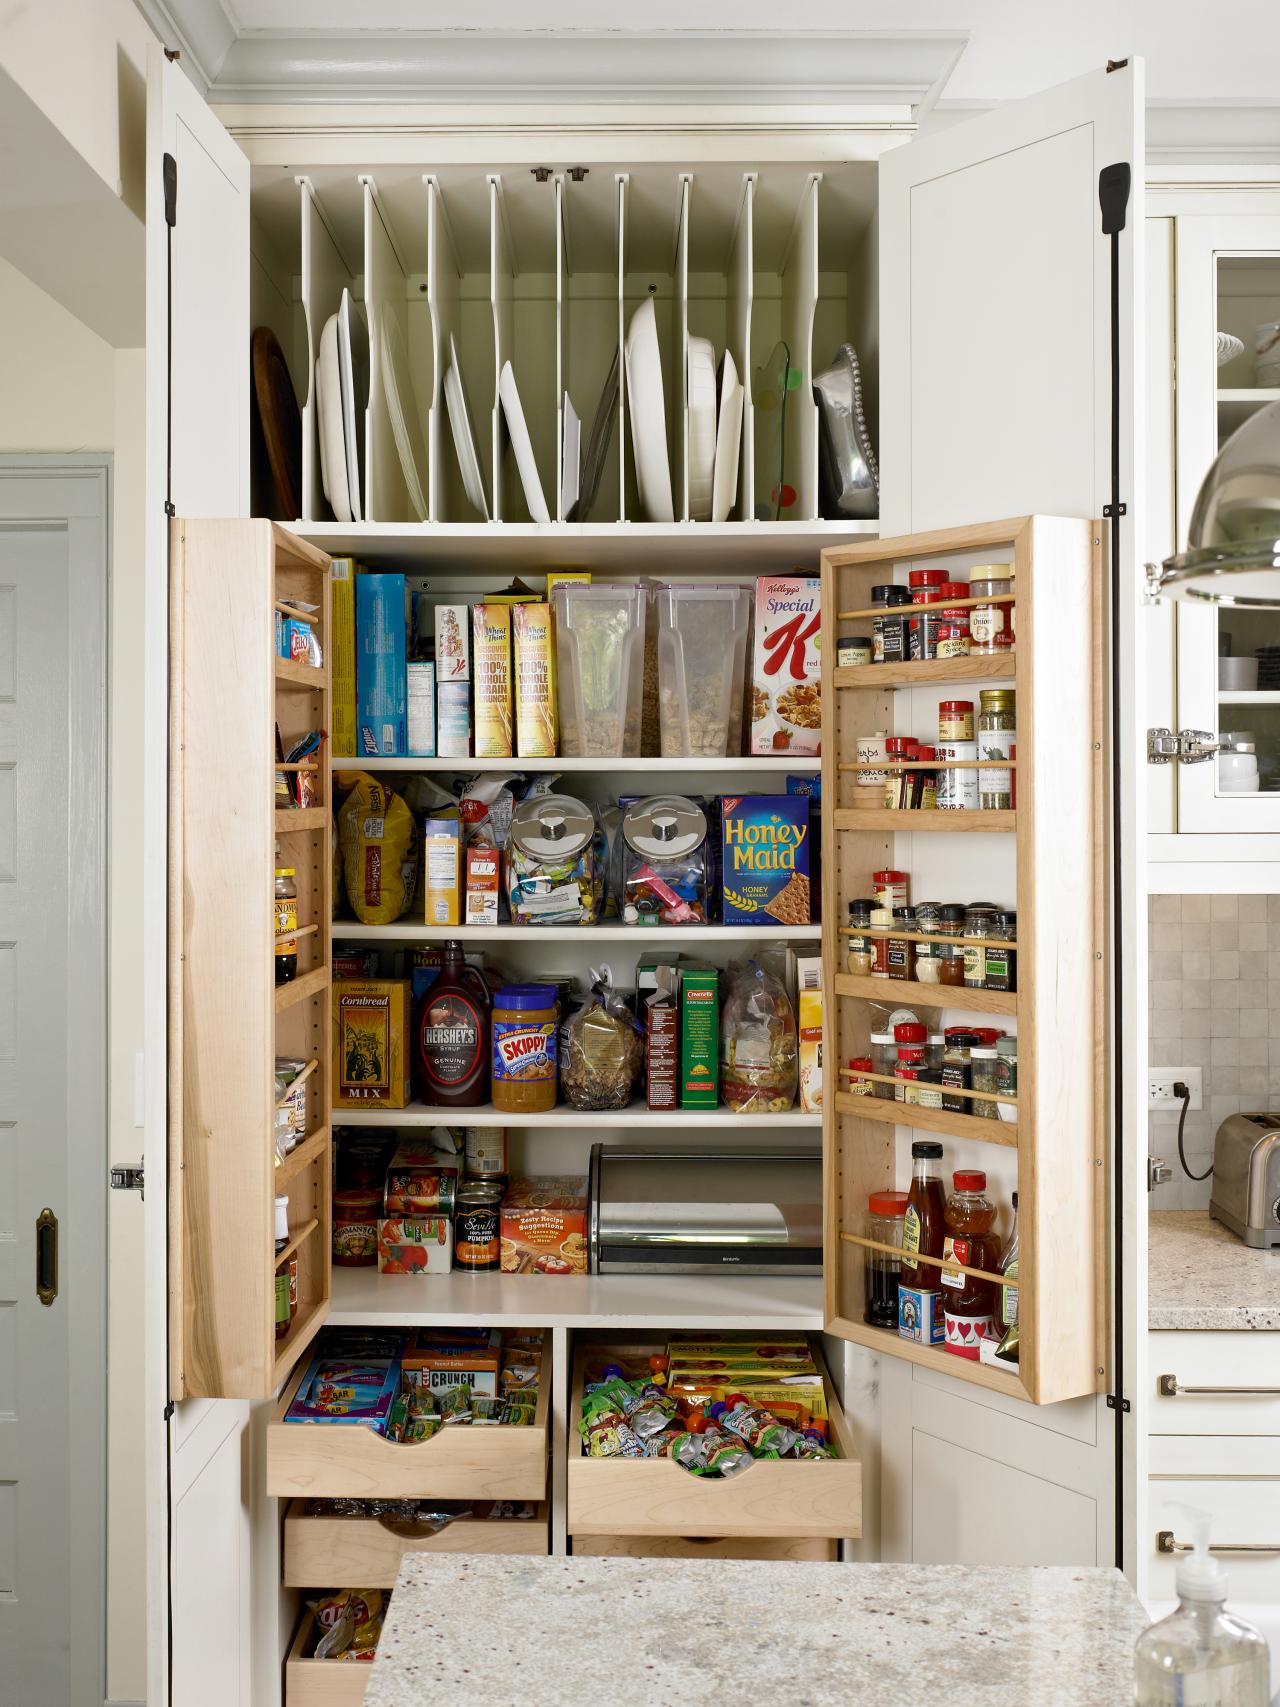 kitchen cabinets ideas for storage photo - 6